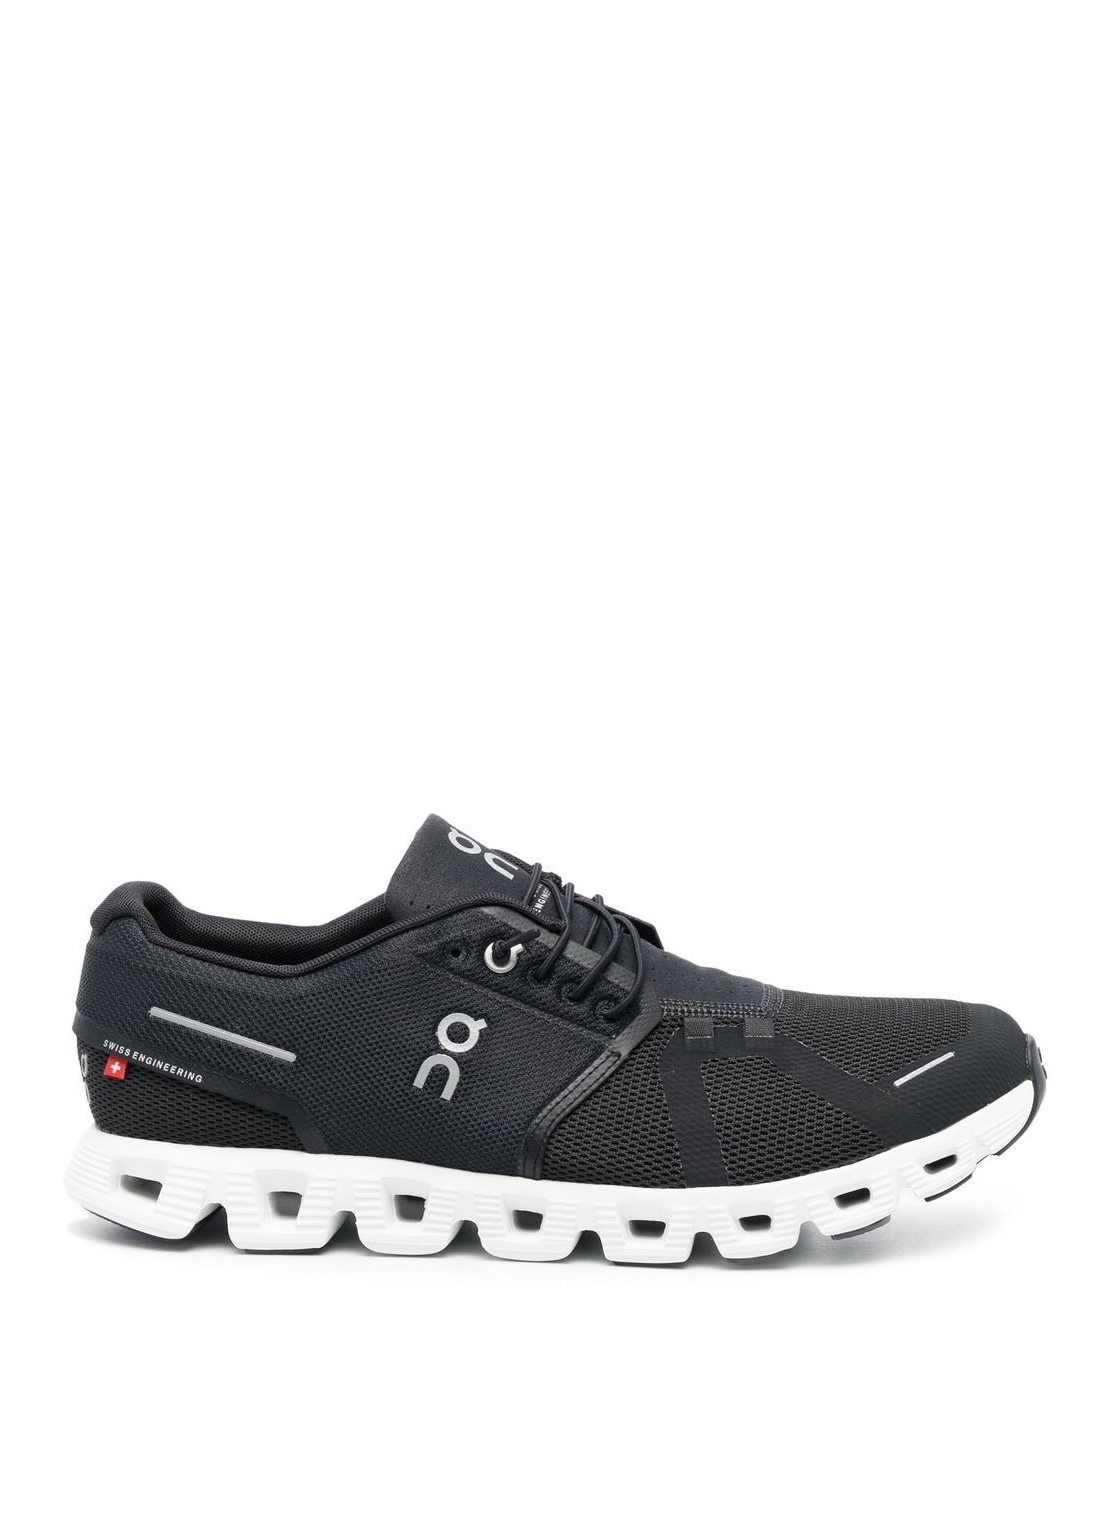 Sneaker on running sneaker man cloud 5 men 5998919 black white talla 42
 